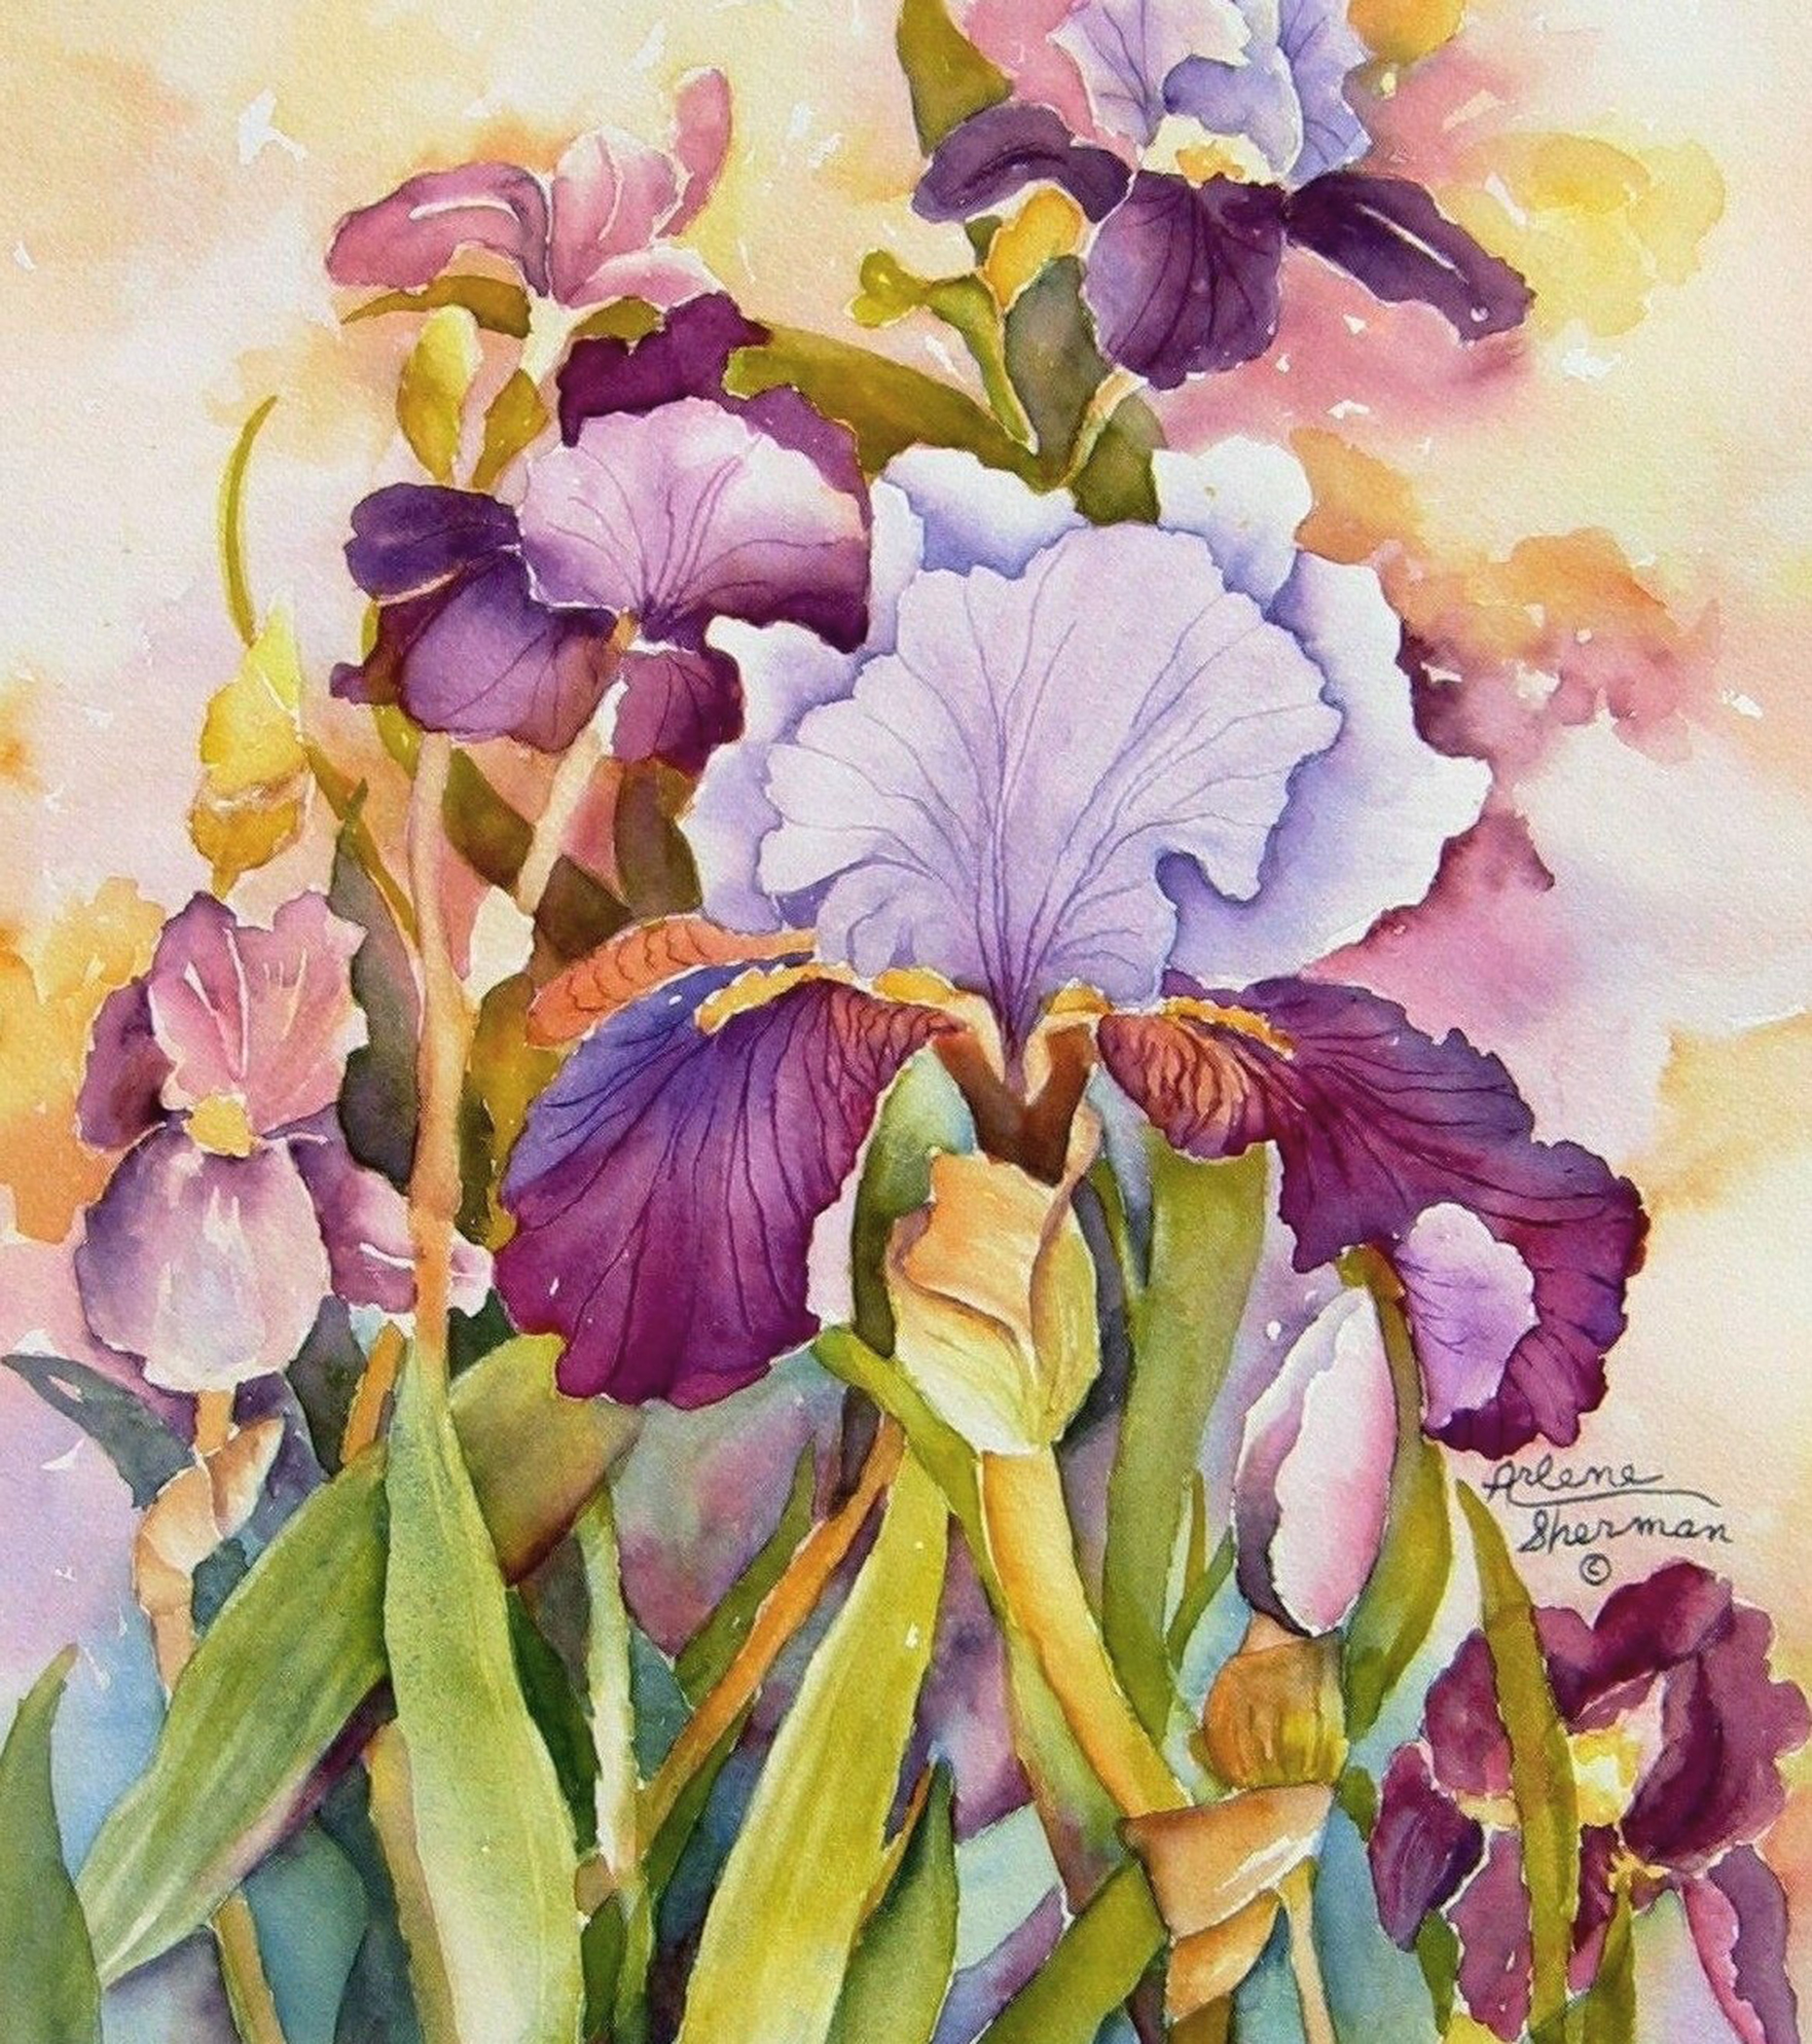 "Blue Iris," by Arlene Sherman